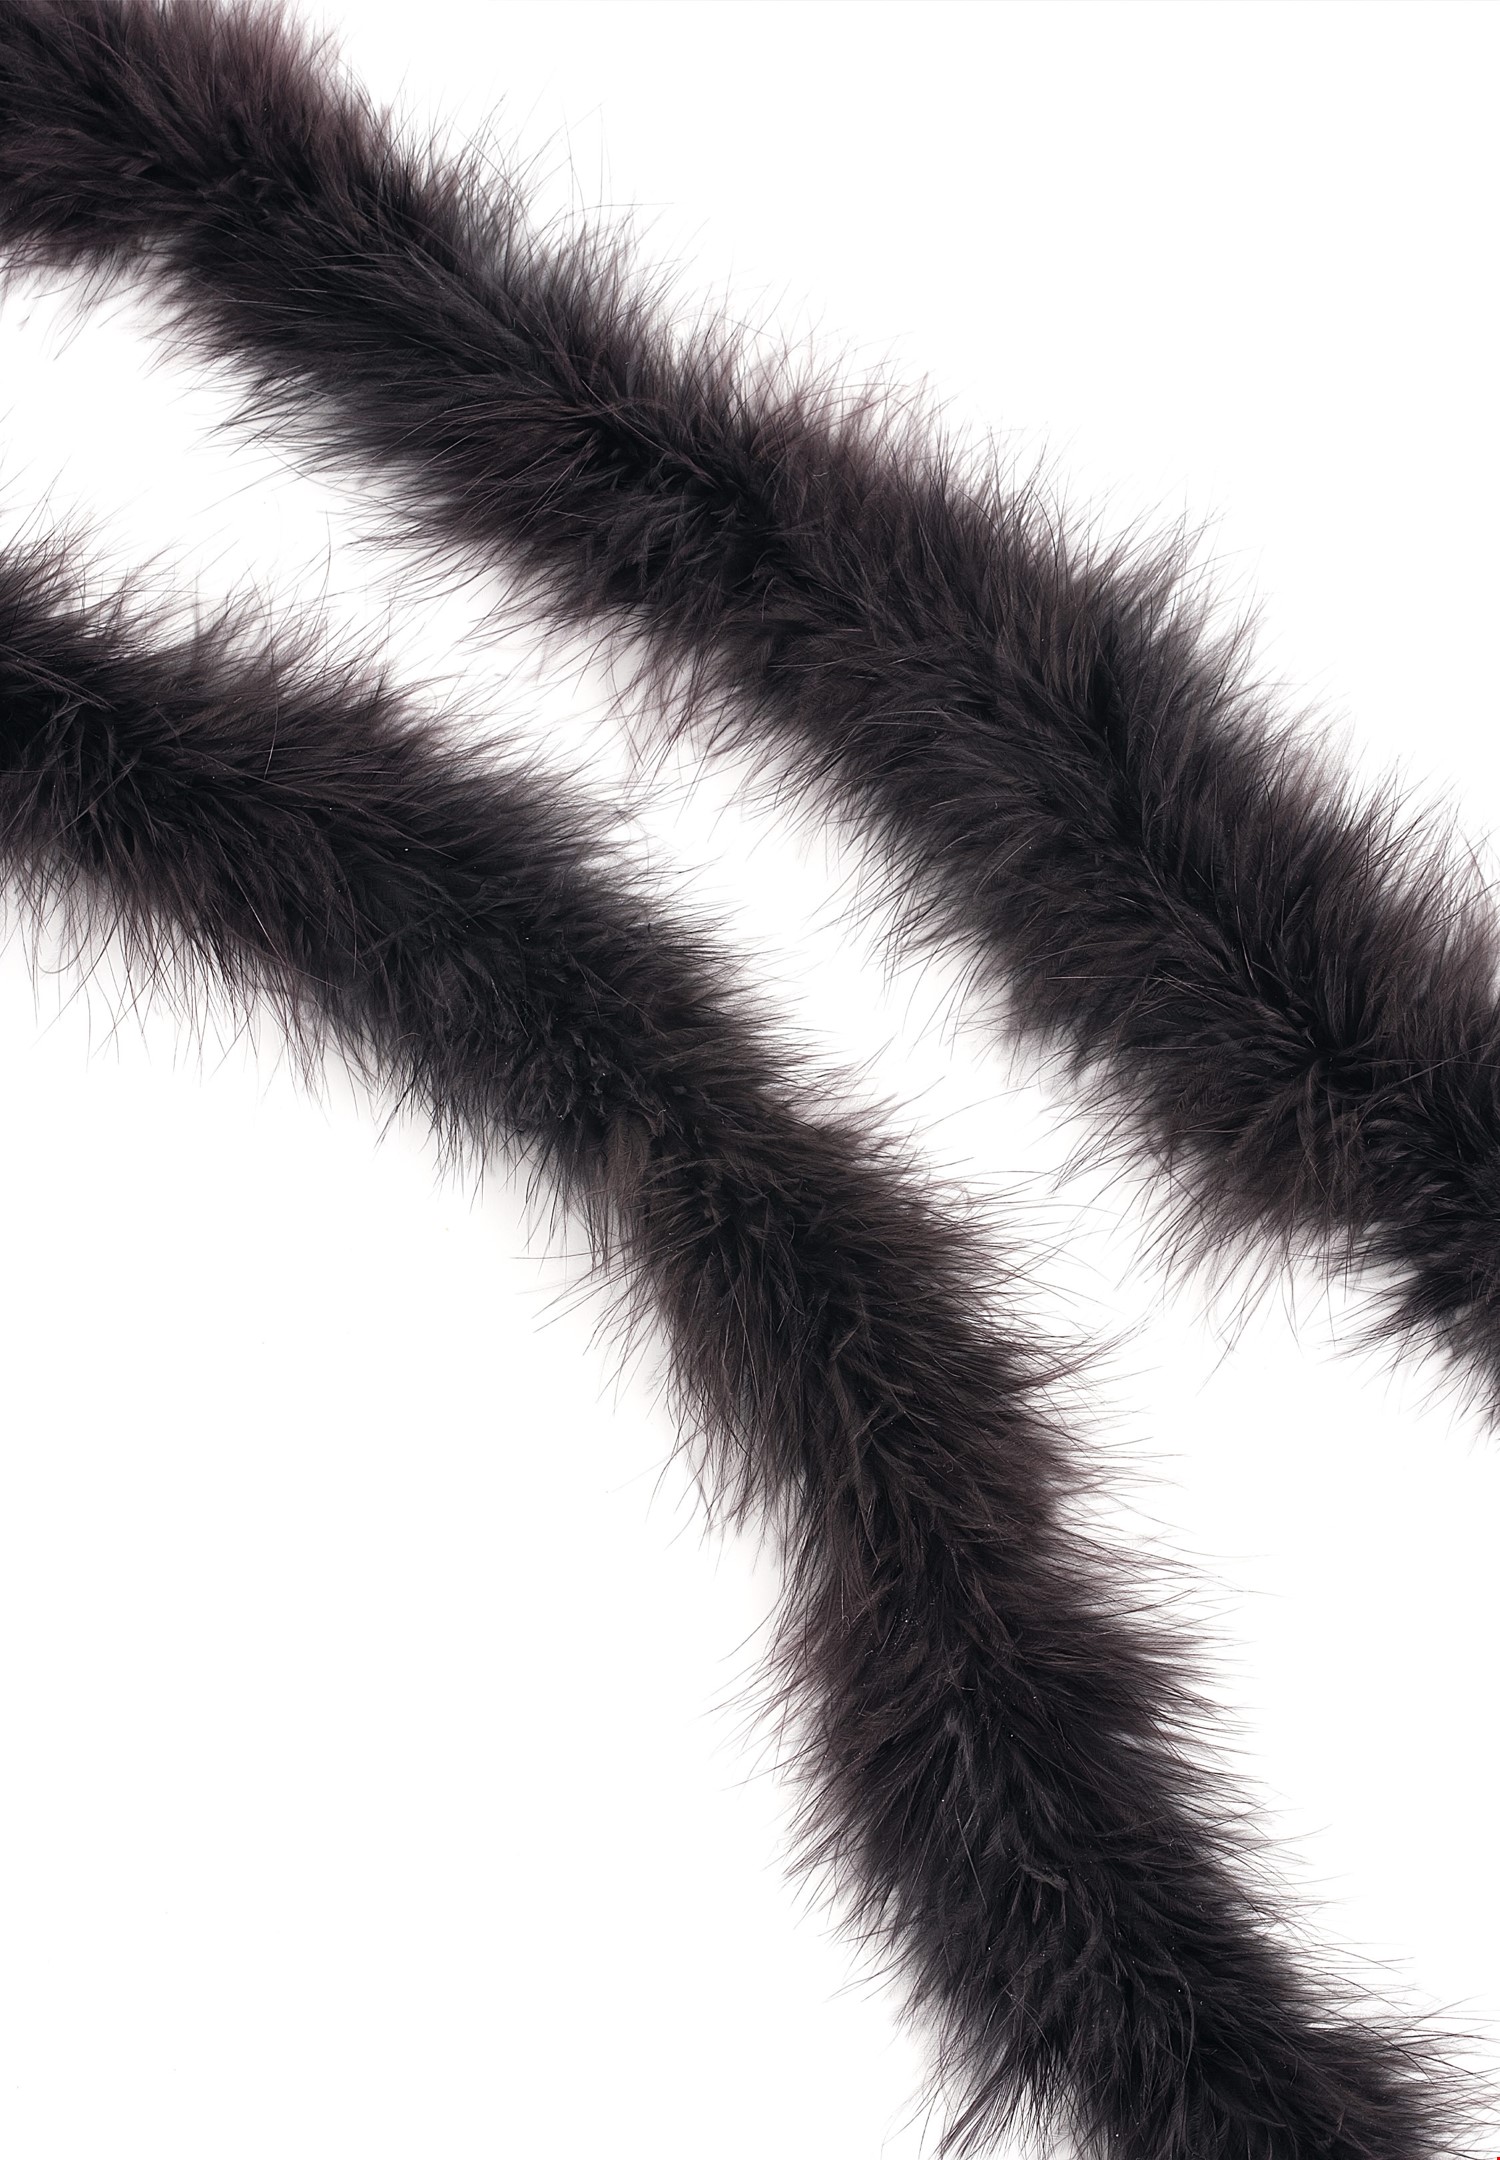 Fluffy Faux Fur Black & White Crochet Bra Top, Furry Festival Top